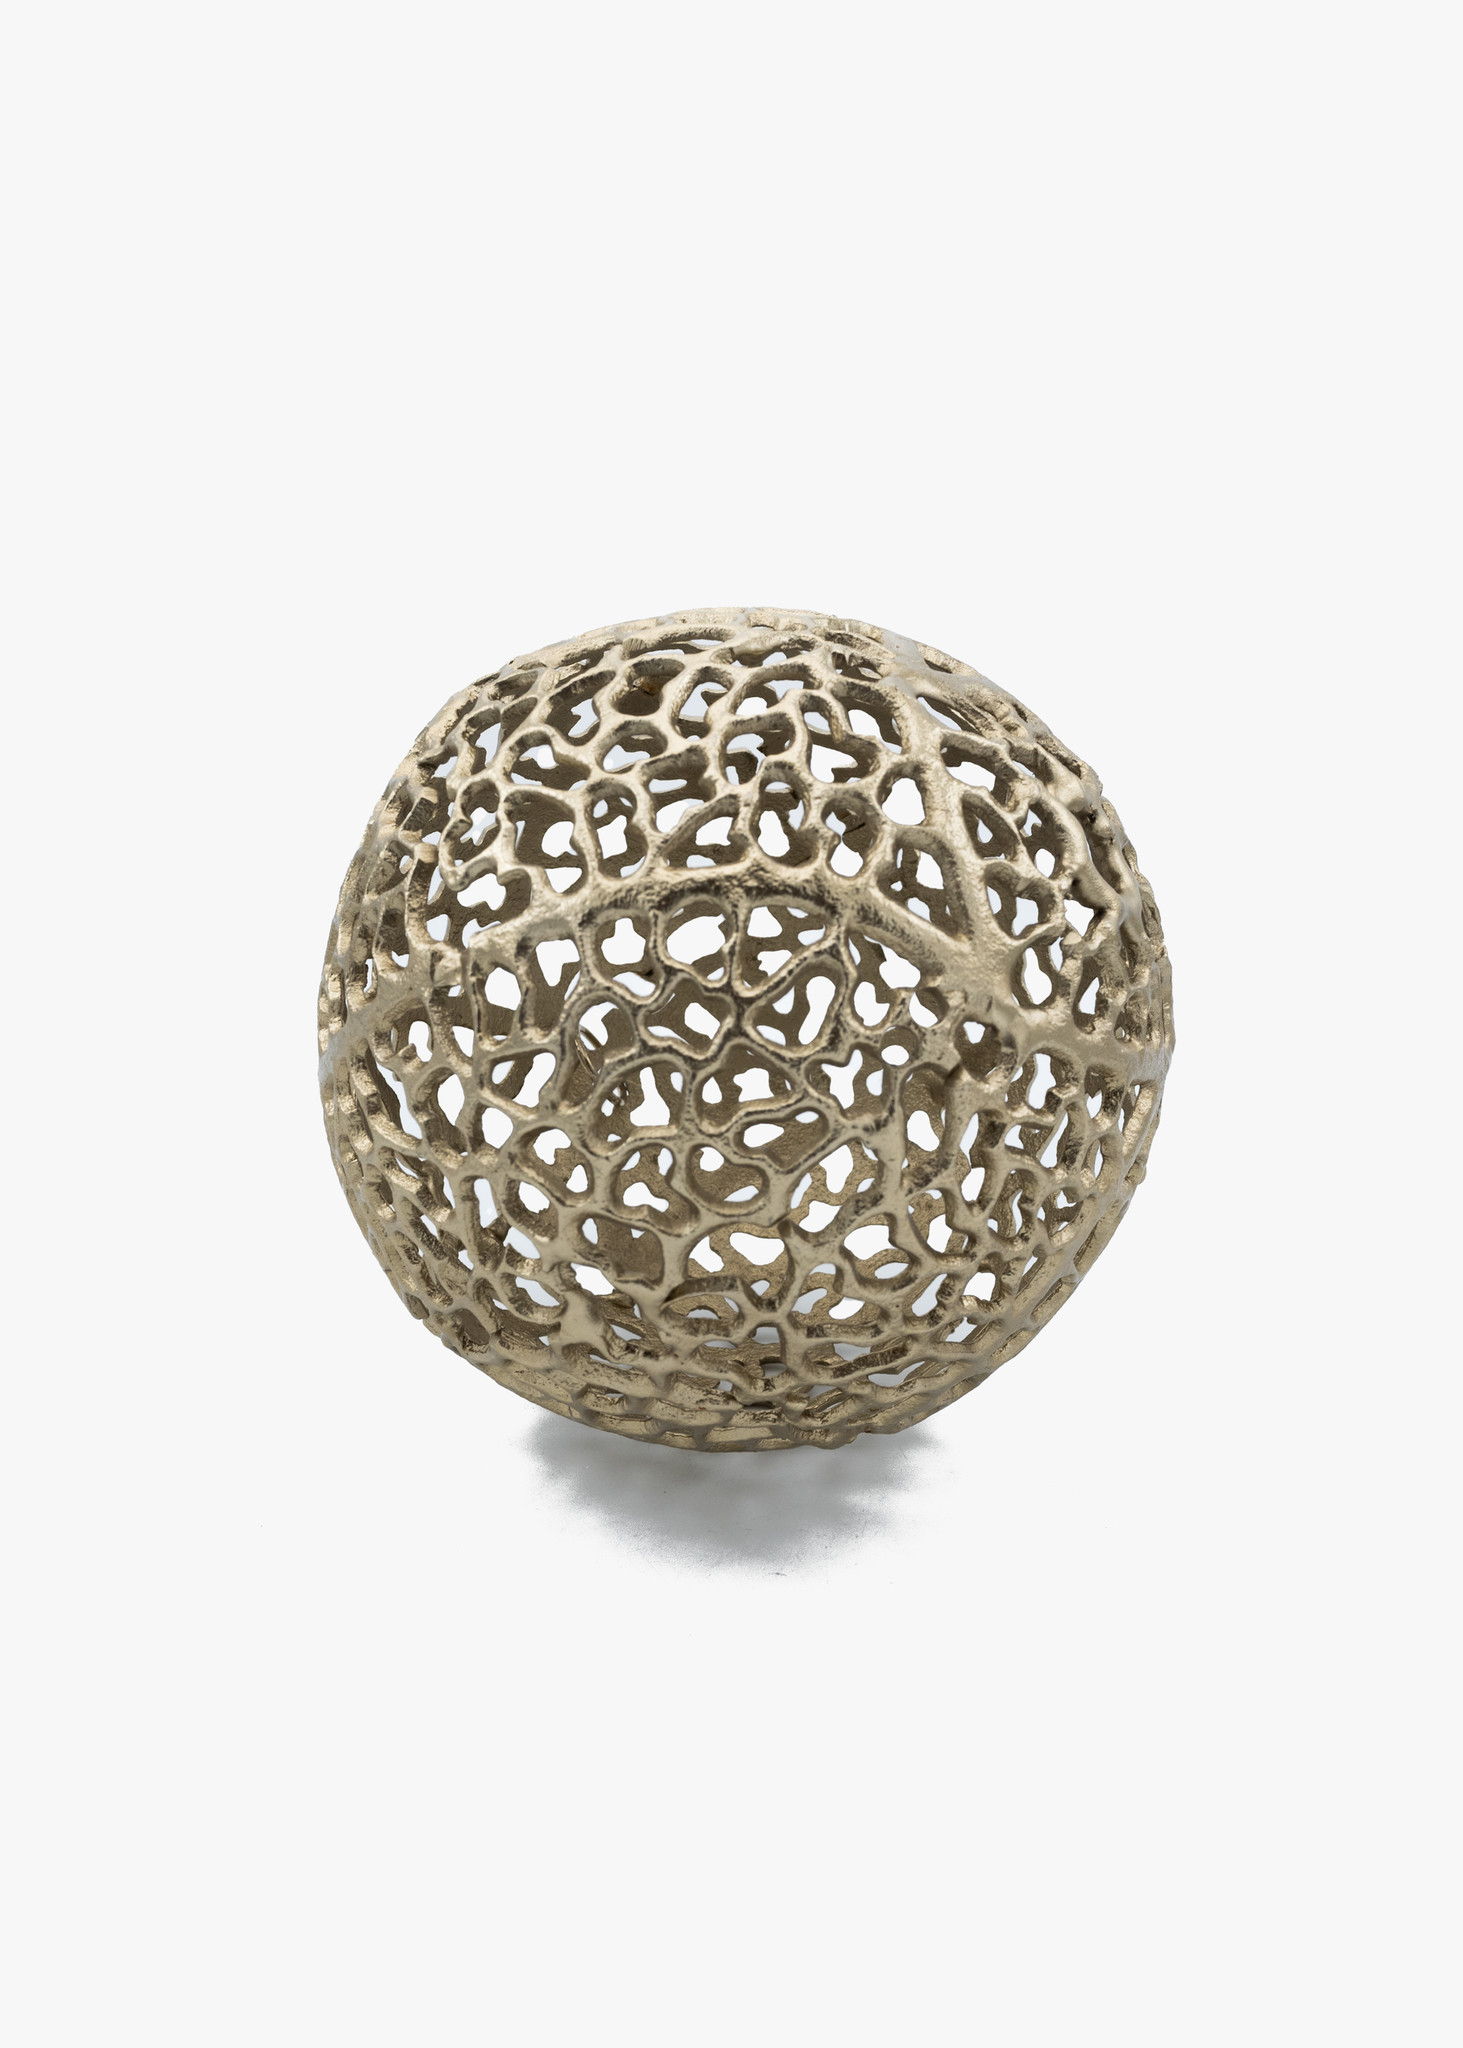 Artistiek Verlichten leeg Ornament mat gouden bal kopen? Bekijk ons aanbod!